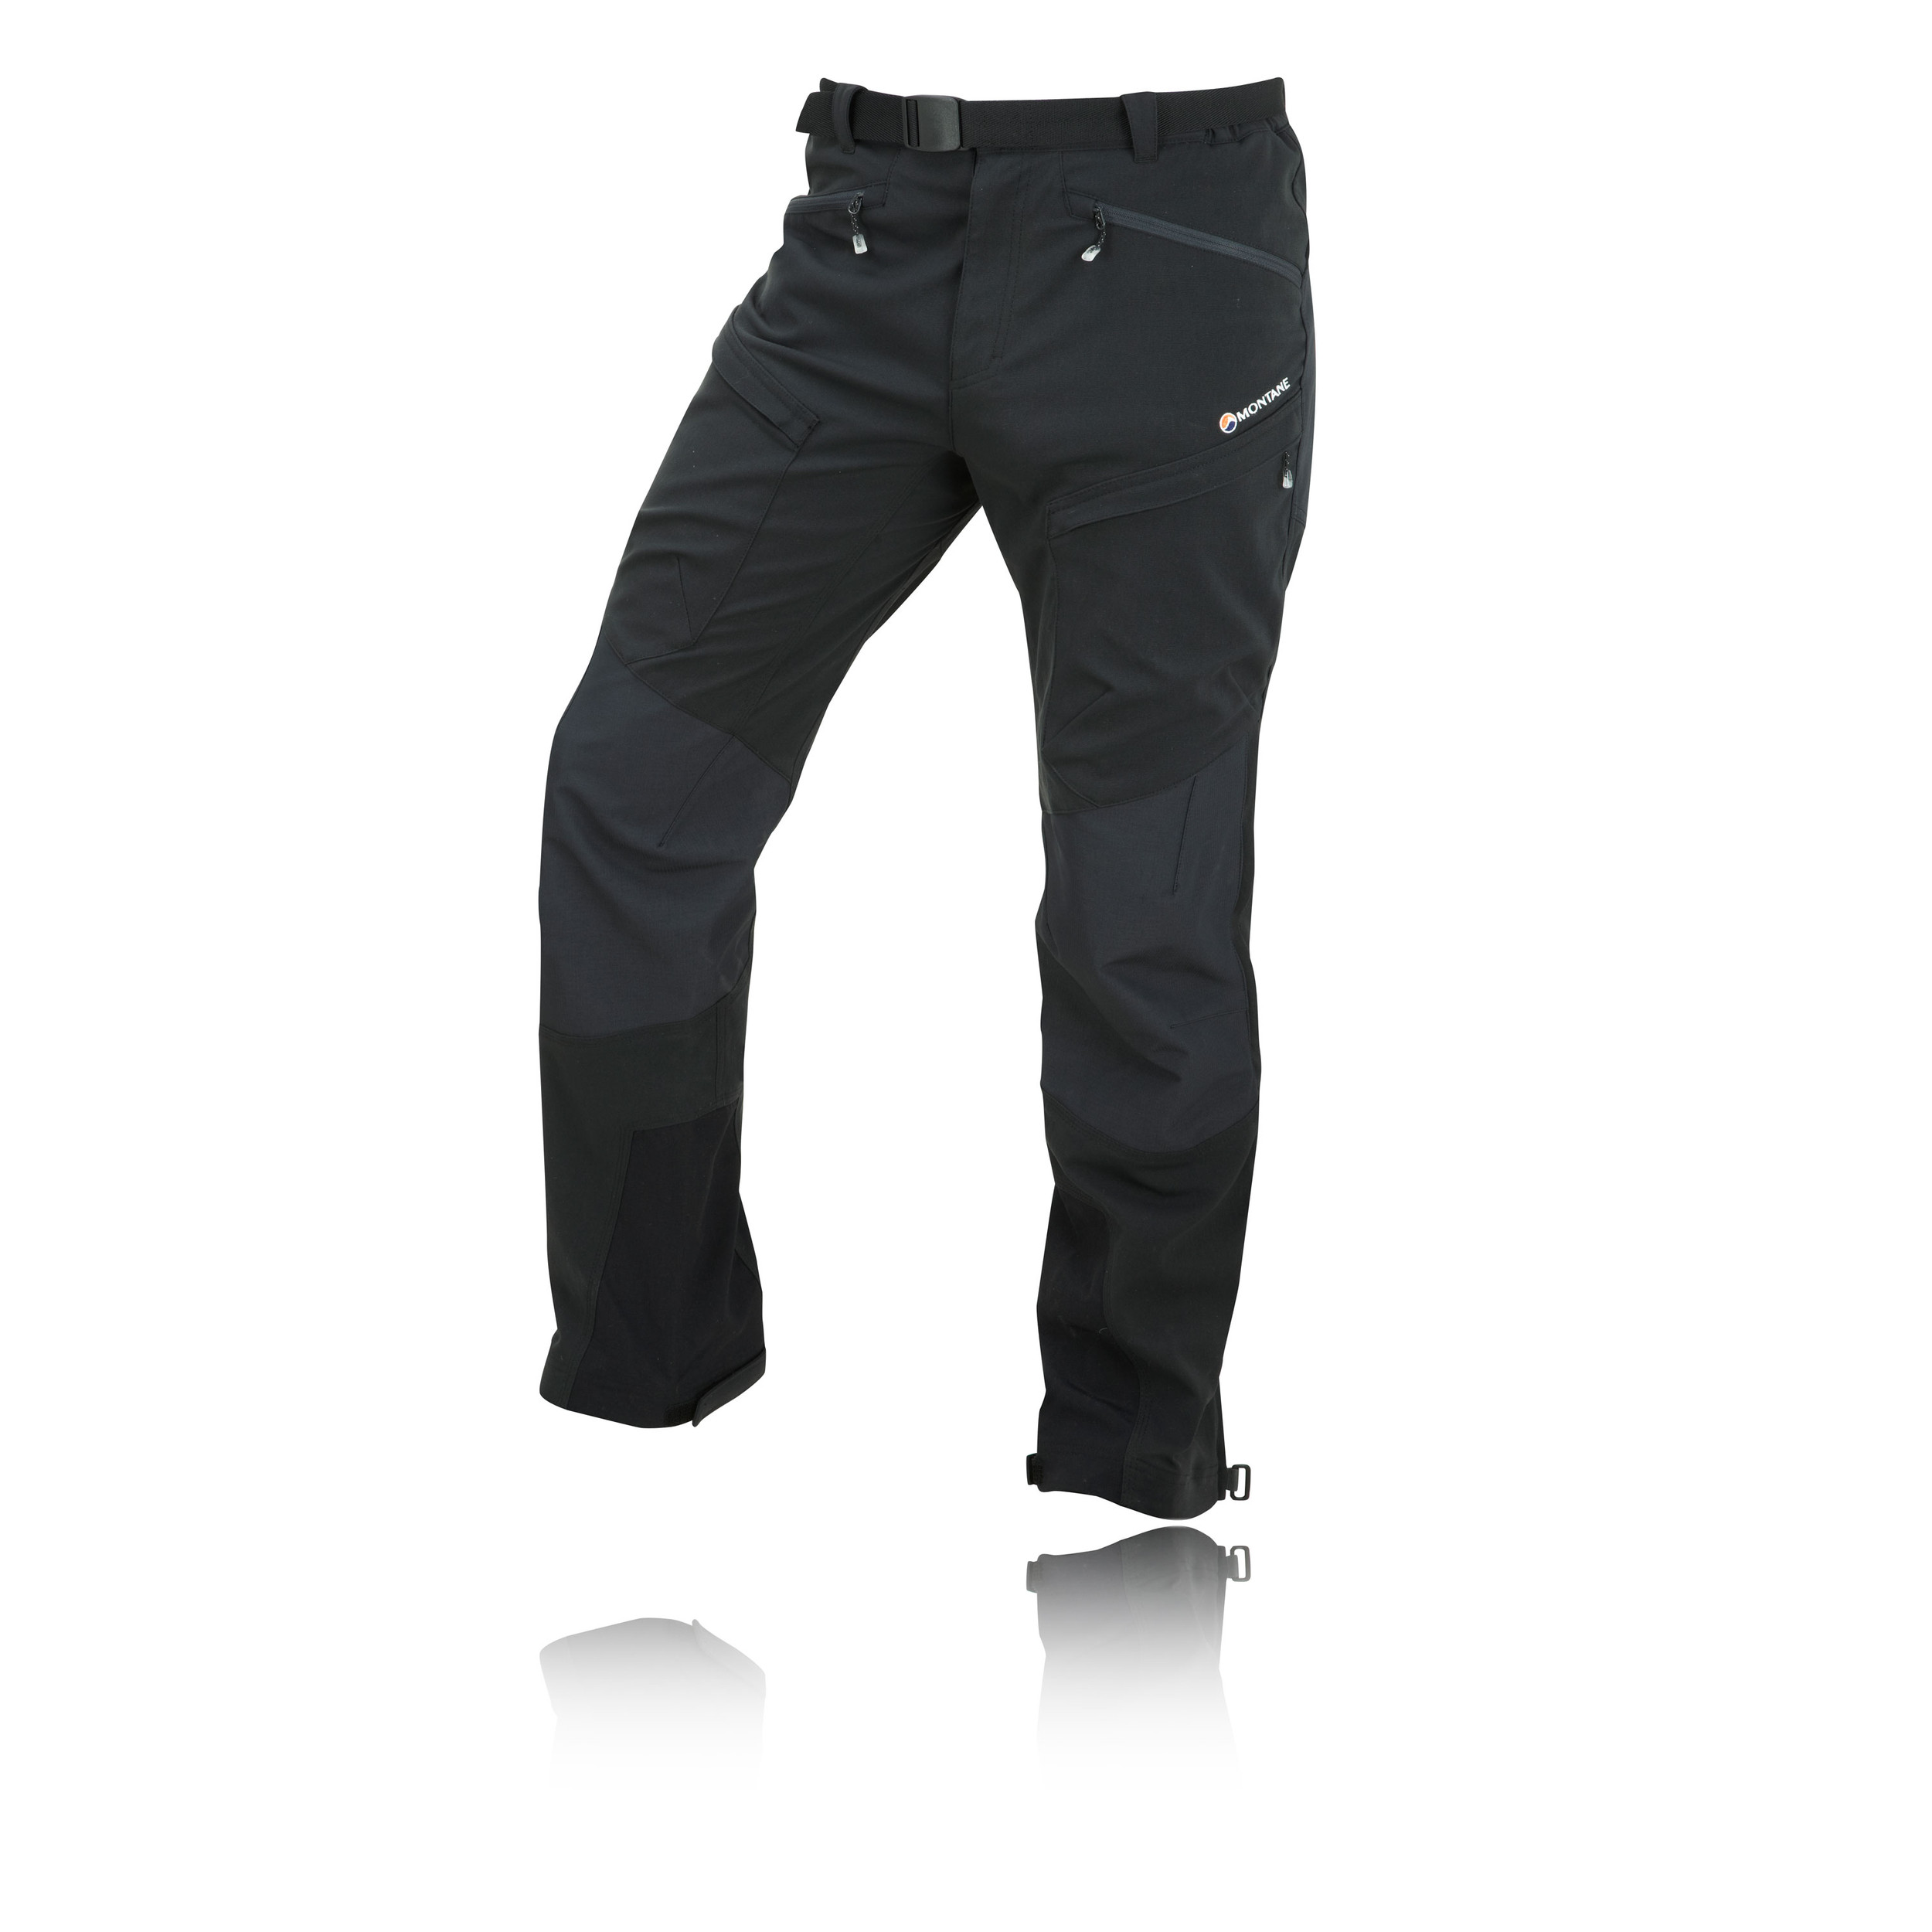 Montane Super Terra pantalons (Short Leg) - SS21